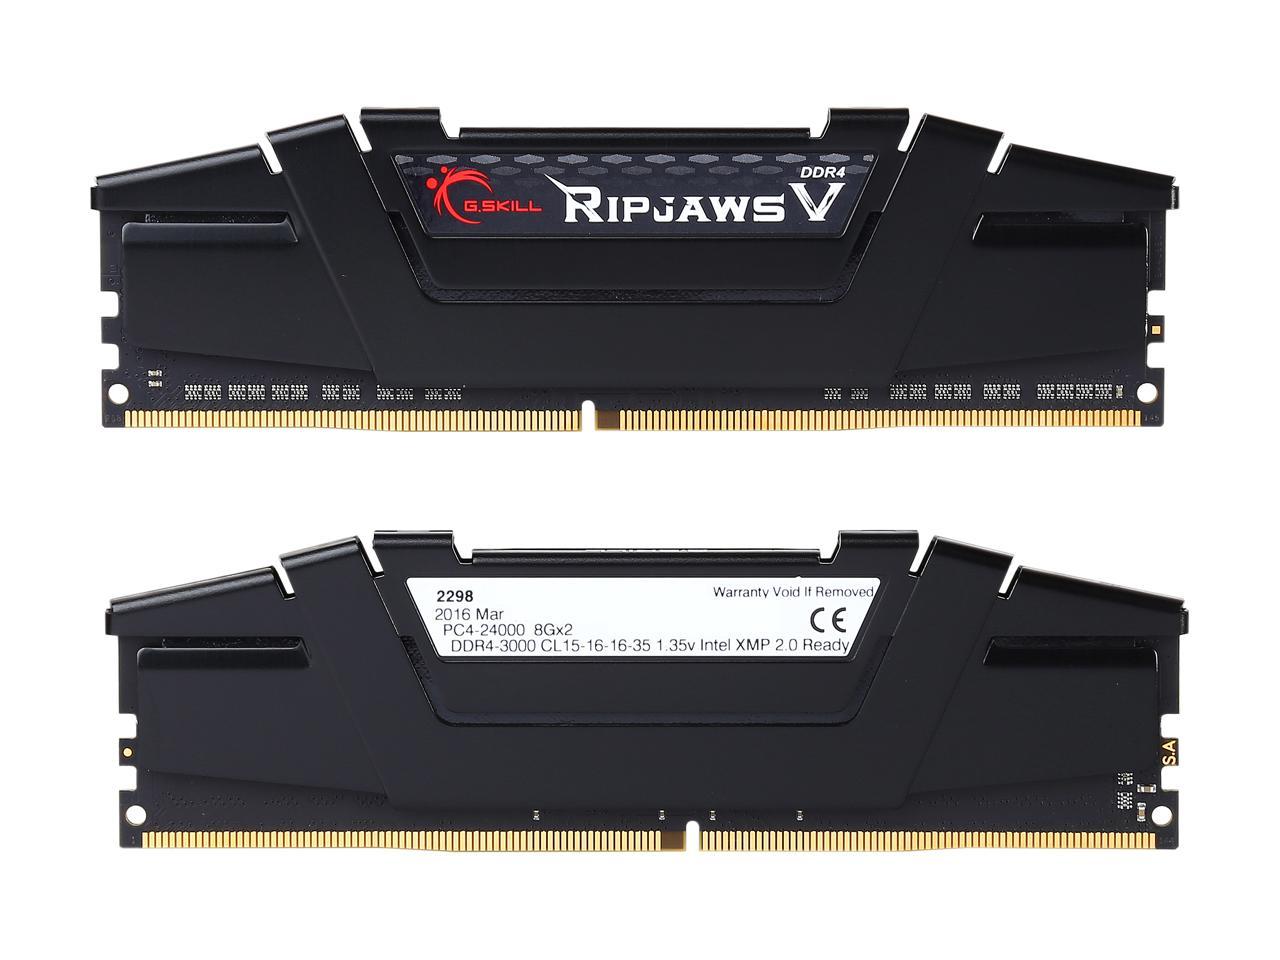 G.SKILL Ripjaws V Series 16GB (2 x 8GB) 288-Pin DDR4 SDRAM DDR4 3000 (PC4 24000) Desktop Memory Model F4-3000C15D-16GVKB